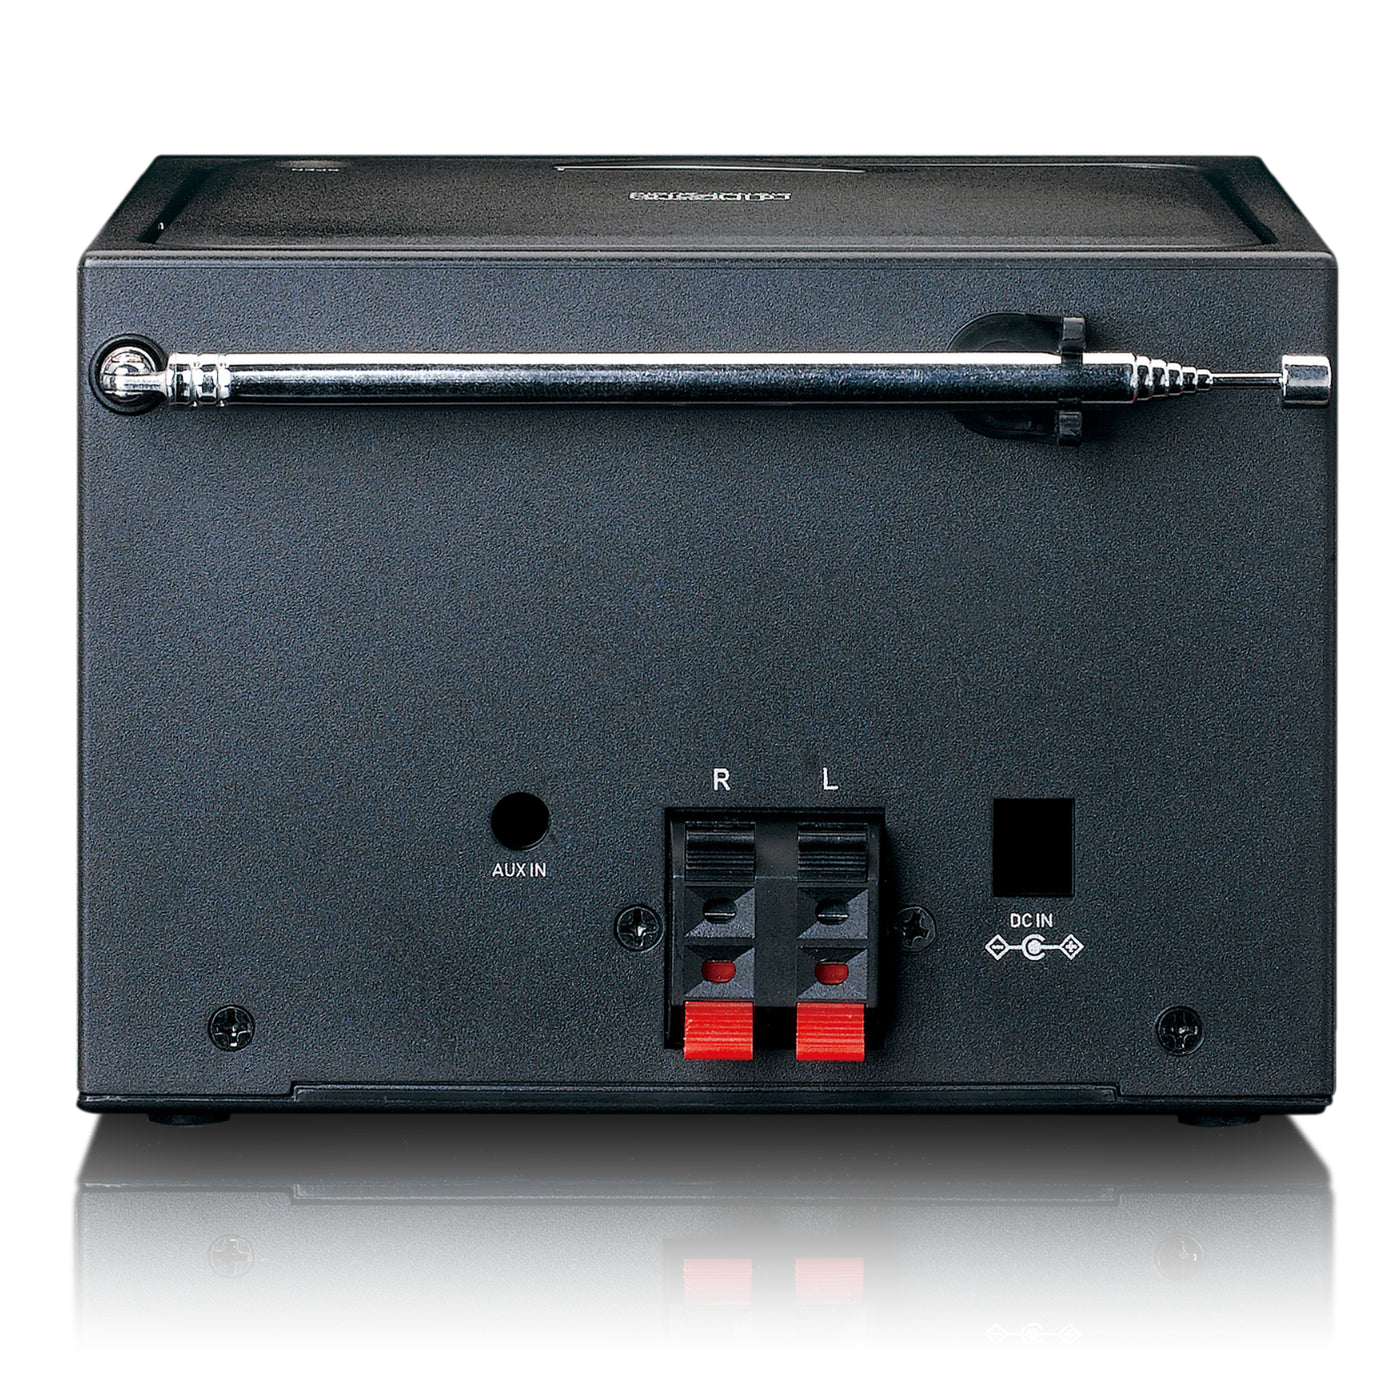 LENCO MC-250BK - Micro set met smart radio, CD/USB speler, internet, DAB+, Bluetooth® - Zwart